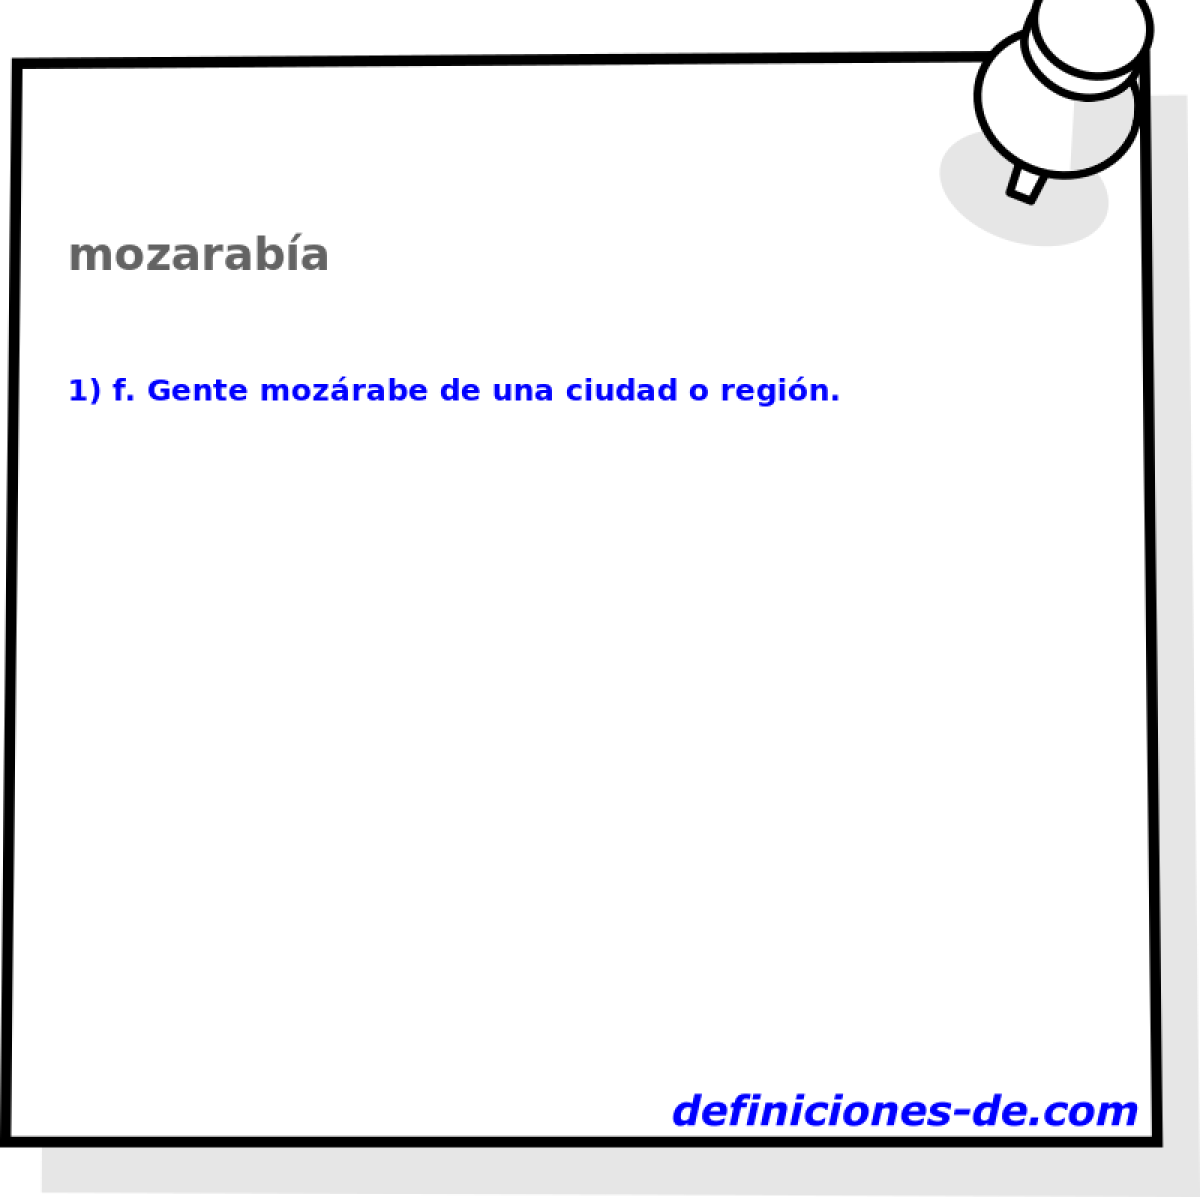 mozaraba 